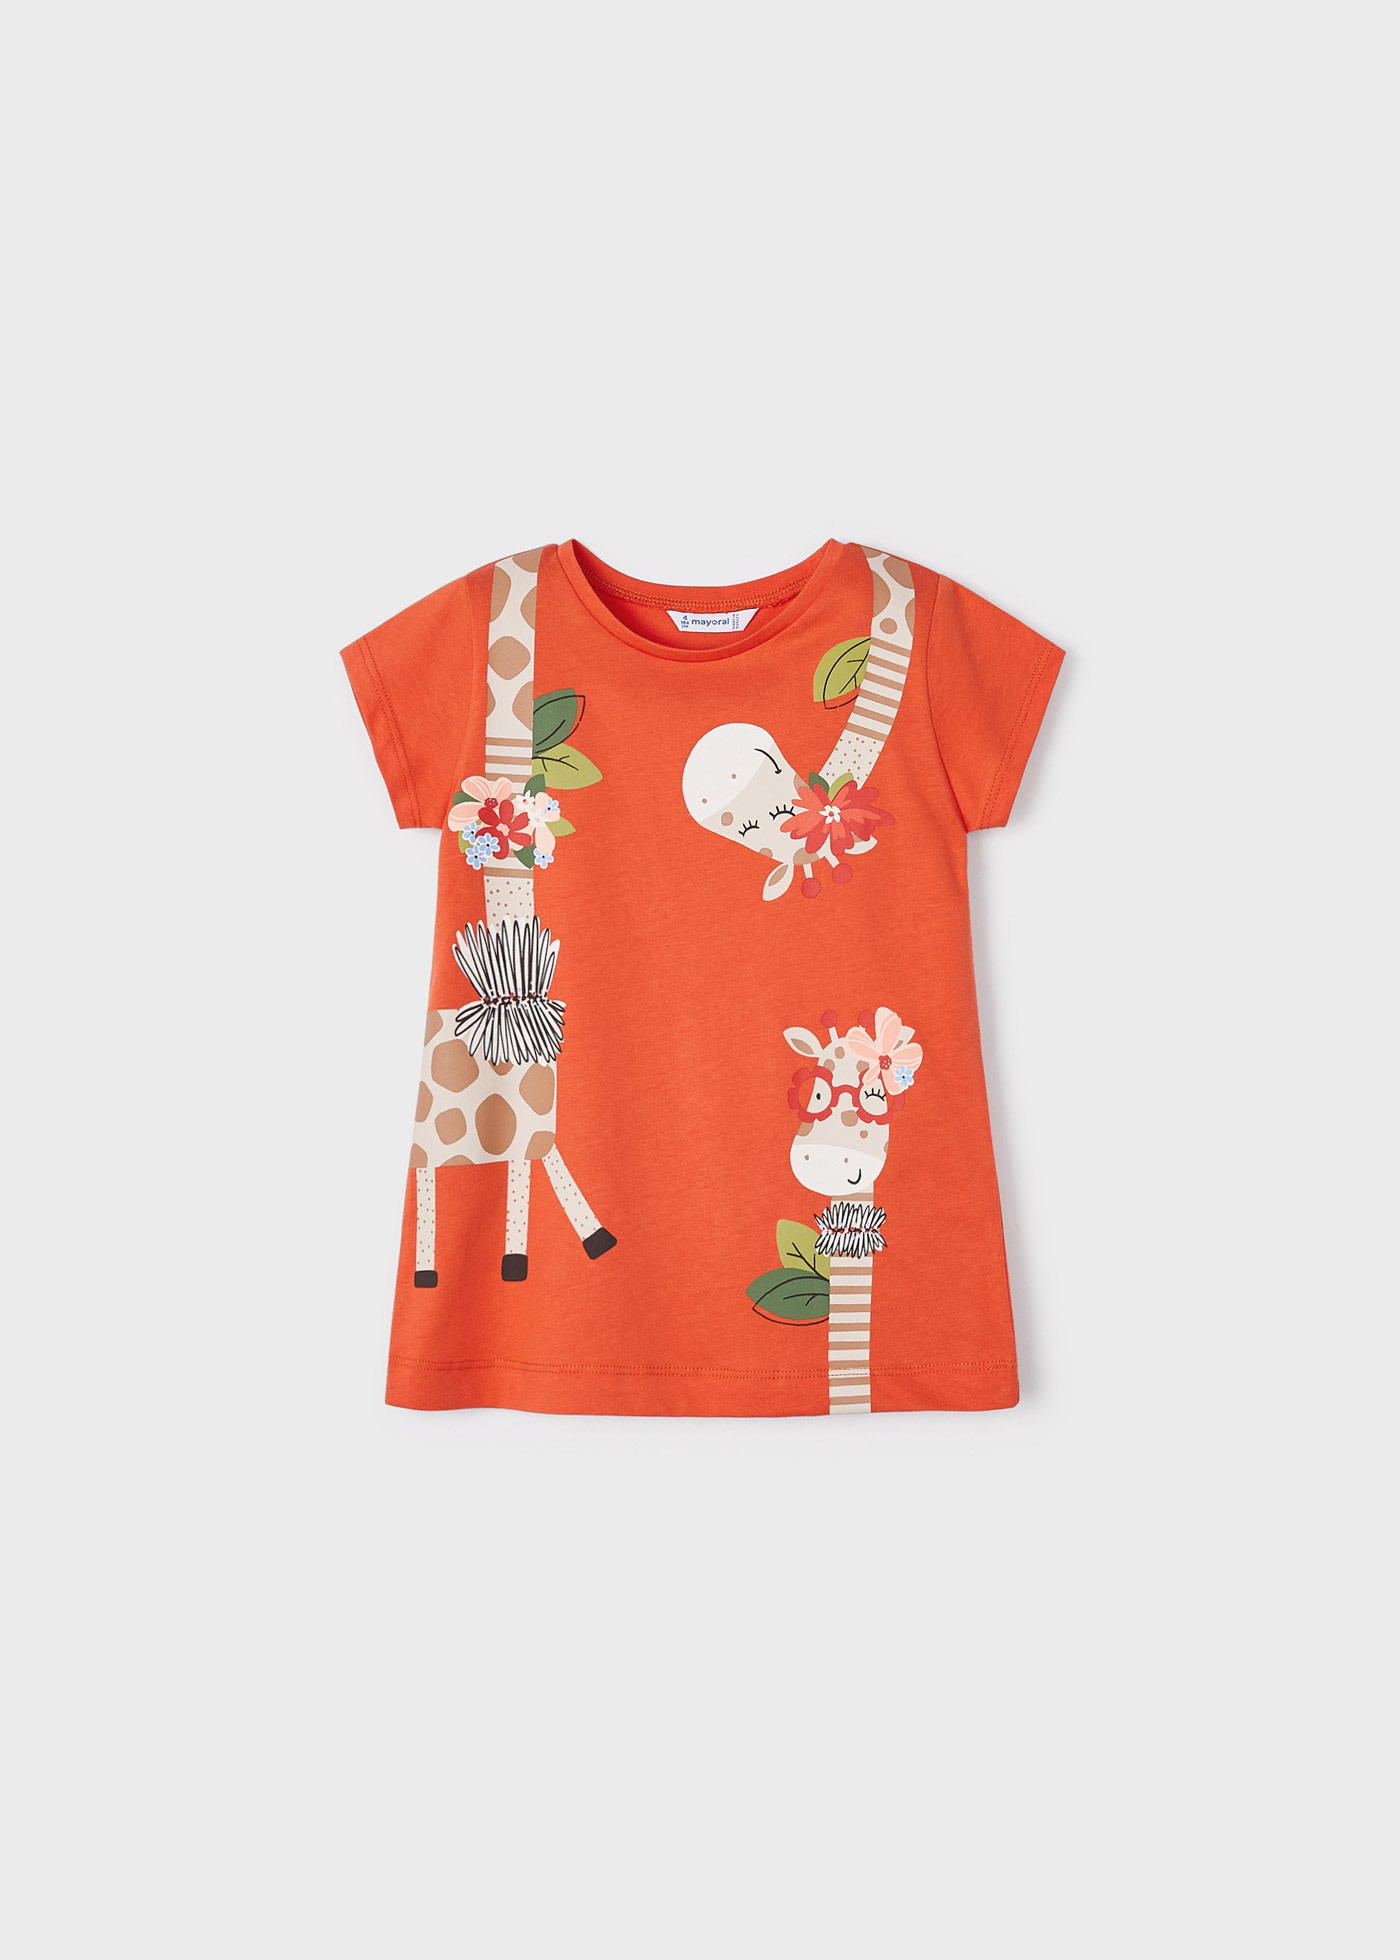 Camiseta naranja algodón ecológico calavera floral niña